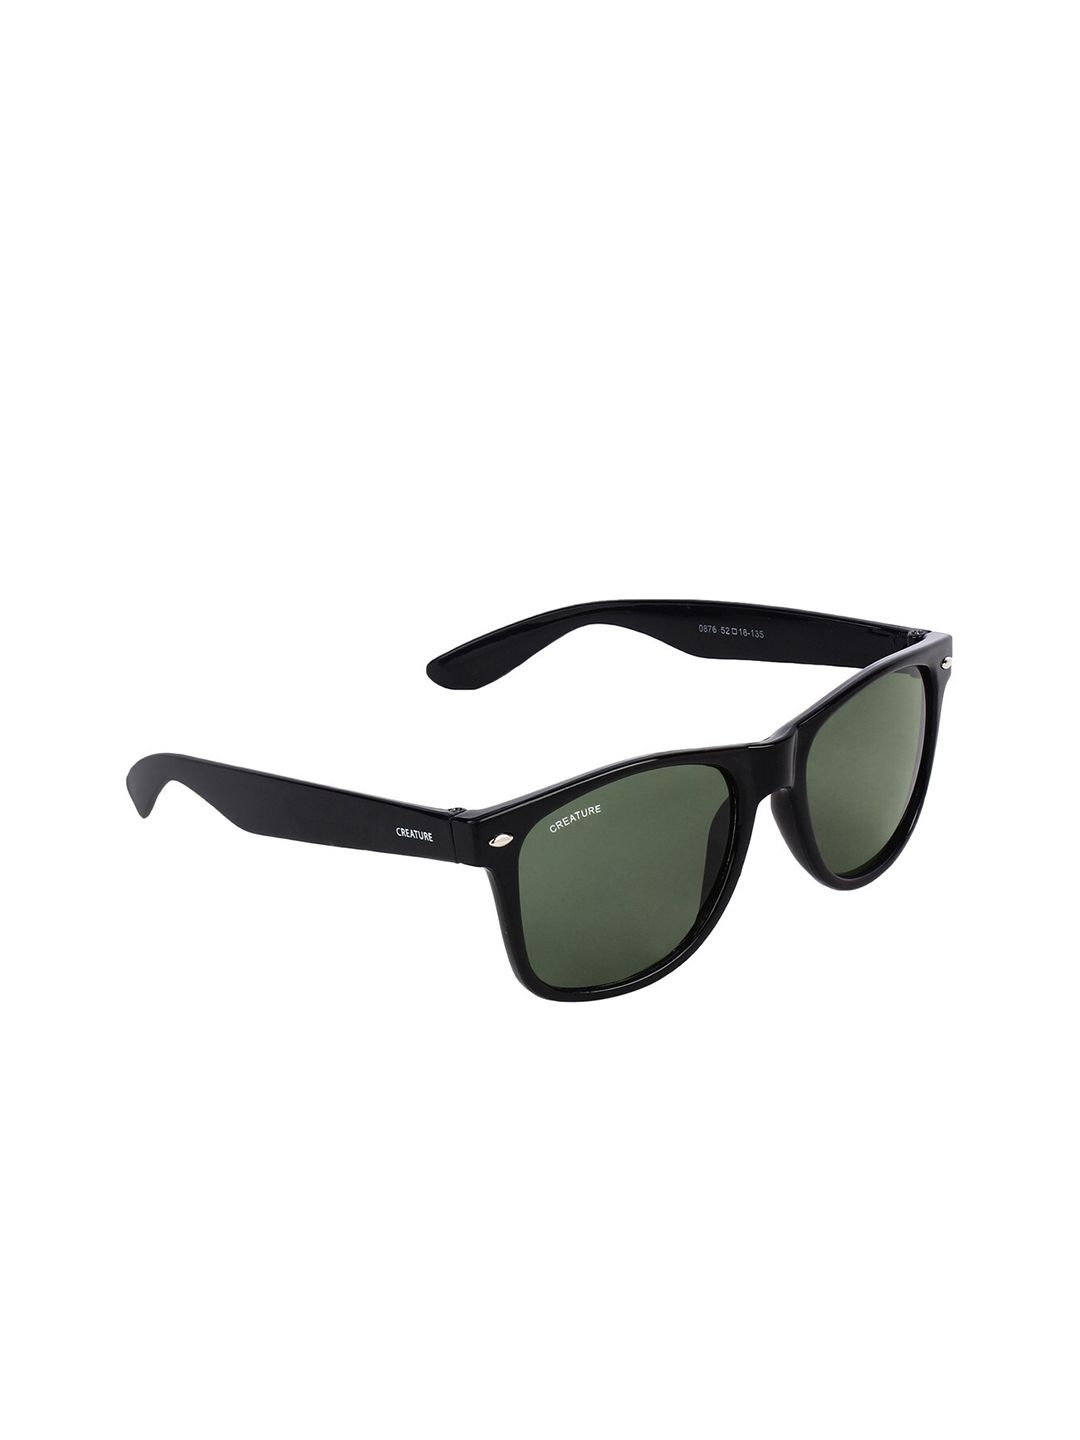 Creature Unisex Green Lens & Black Wayfarer Sunglasses with UV Protected Lens SUN-003 Price in India